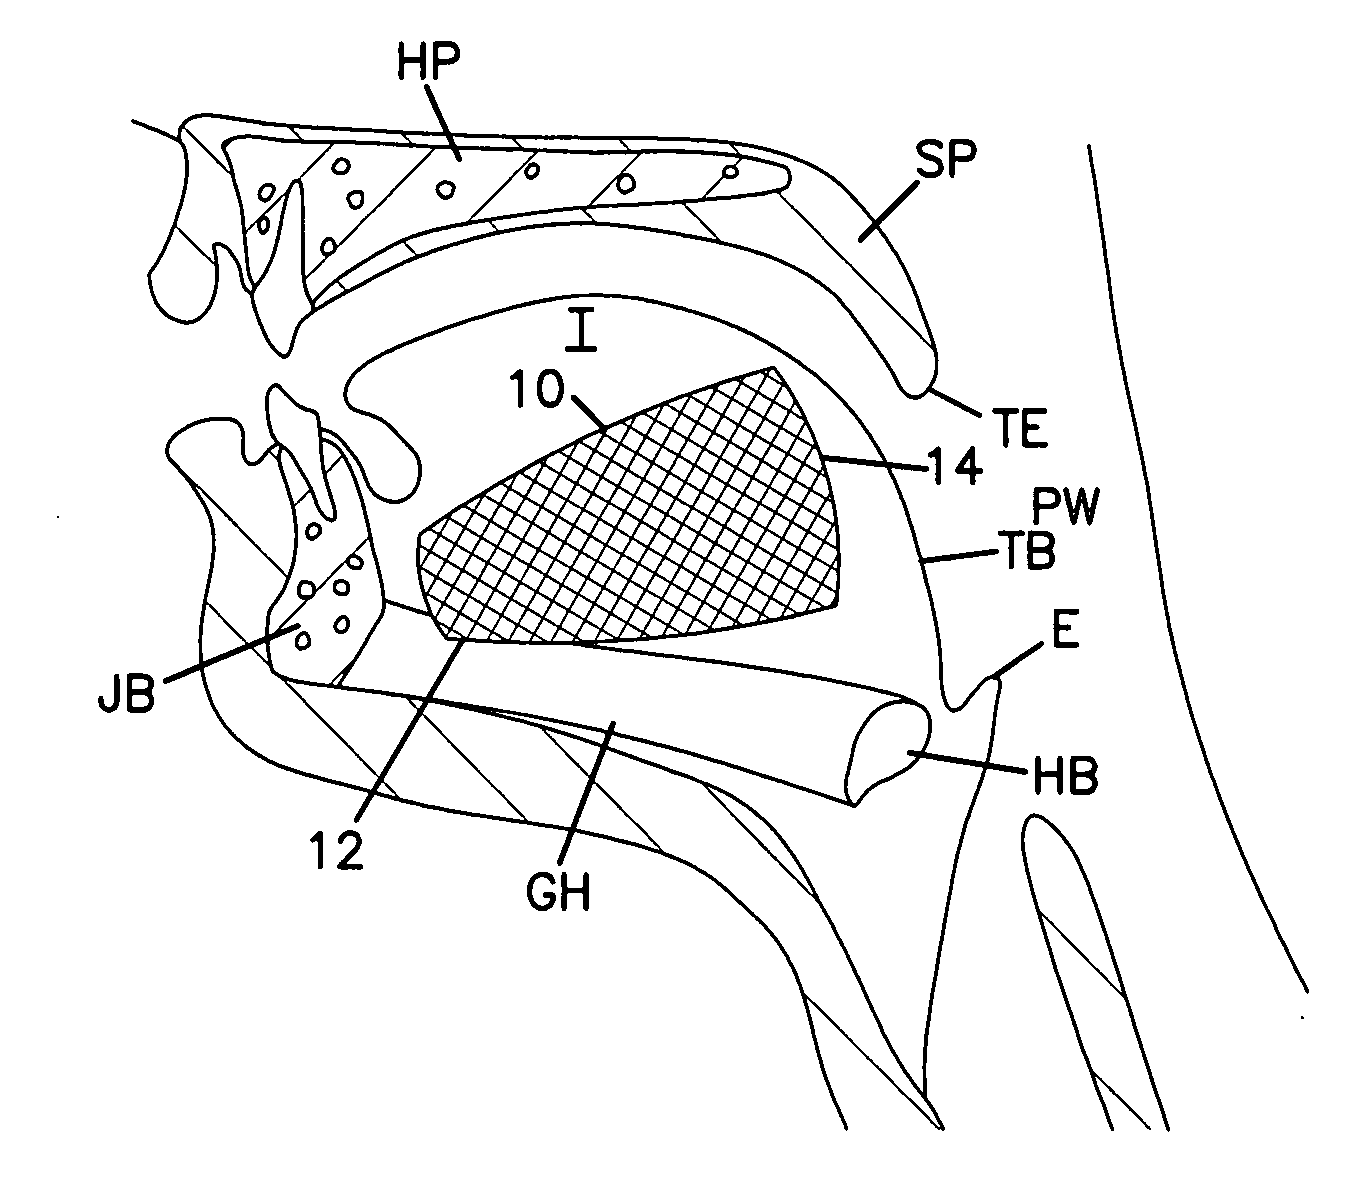 Tongue implant